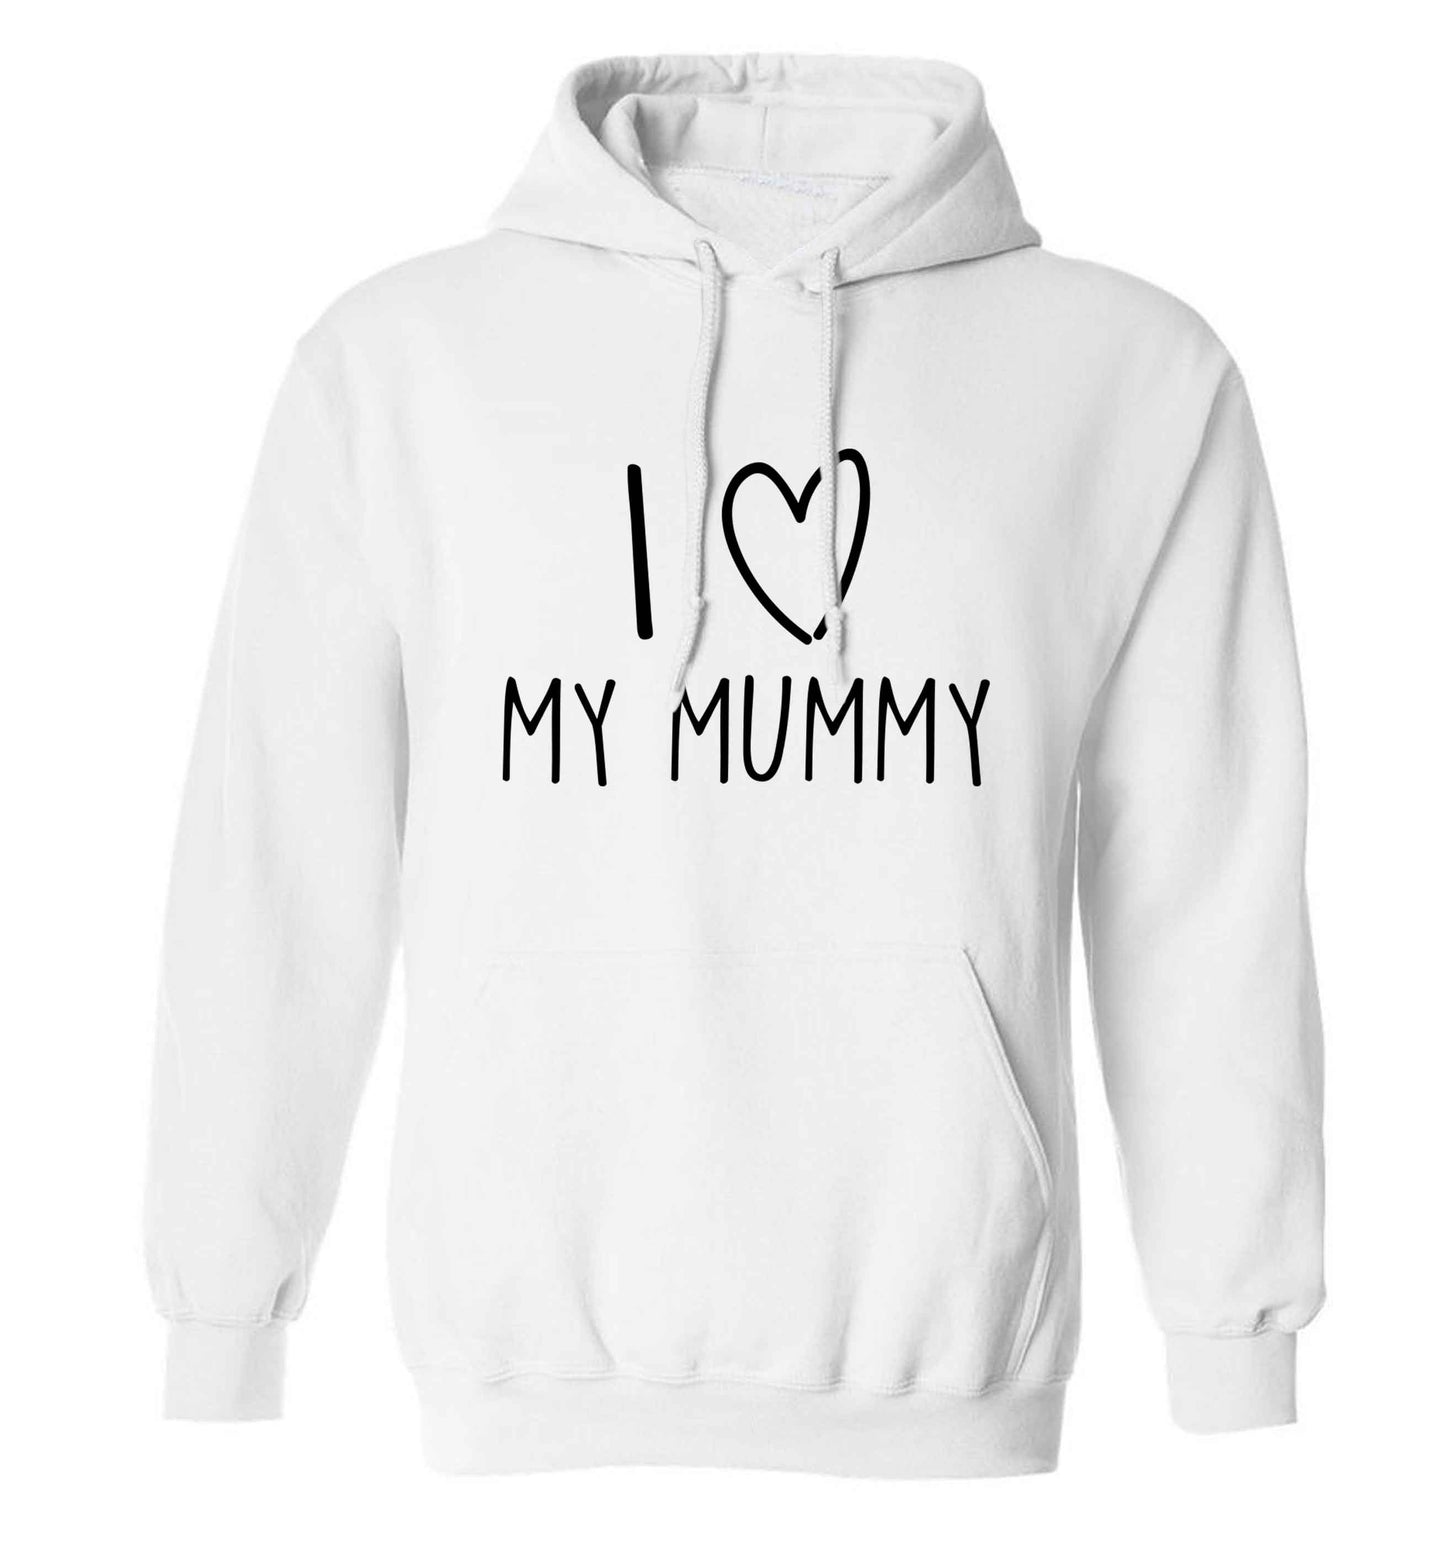 I love my mummy adults unisex white hoodie 2XL